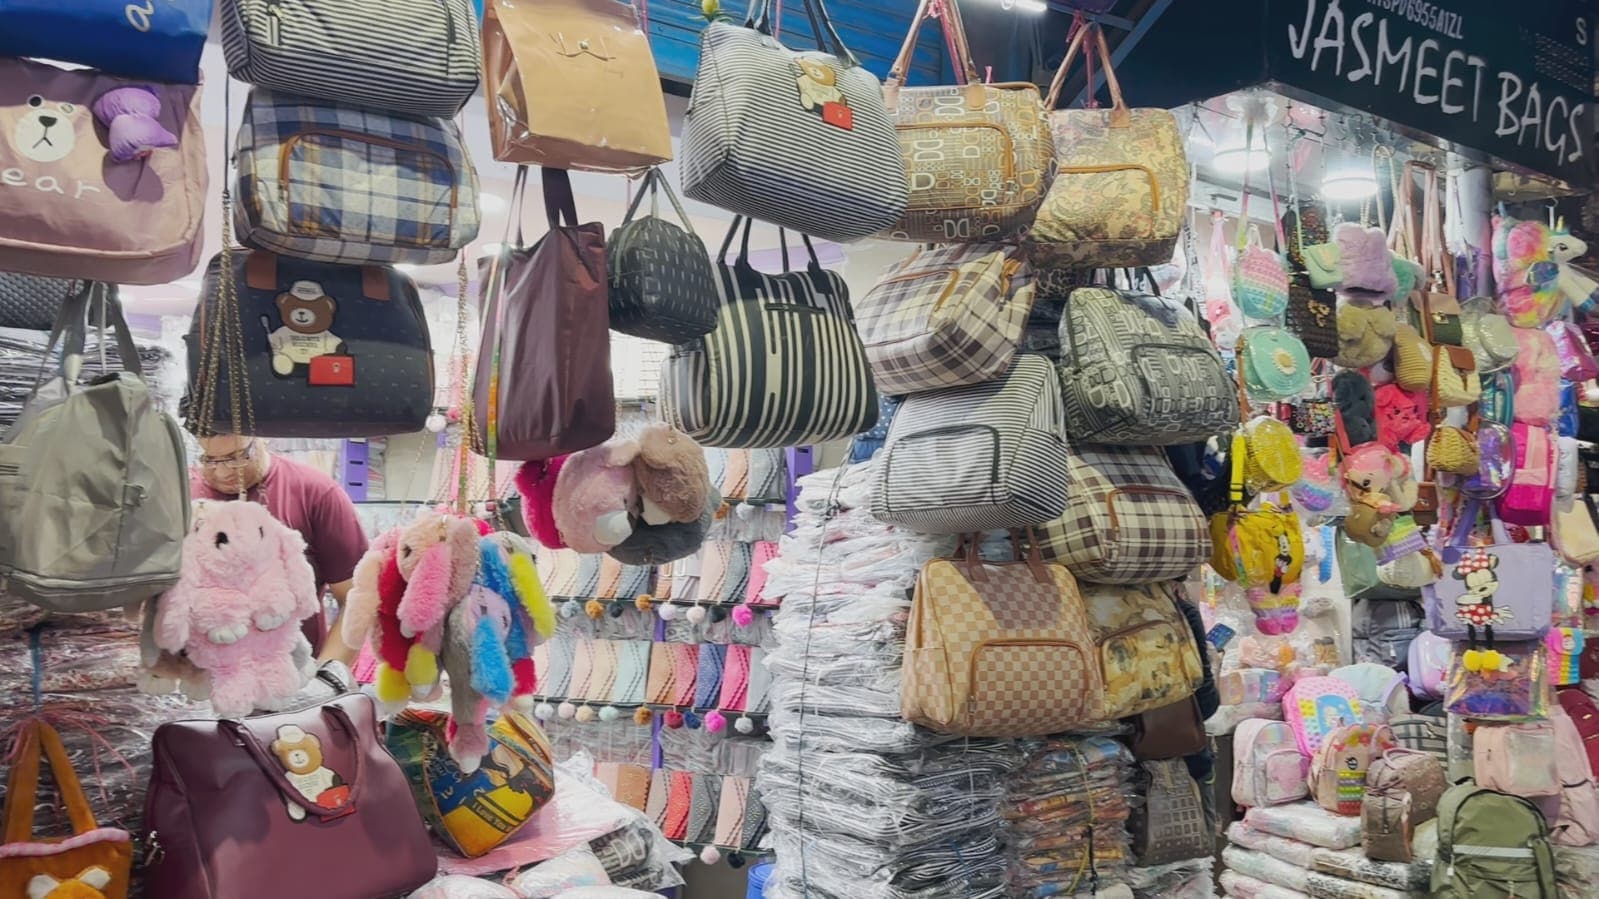 Where are bags manufacturer in Delhi? - Quora